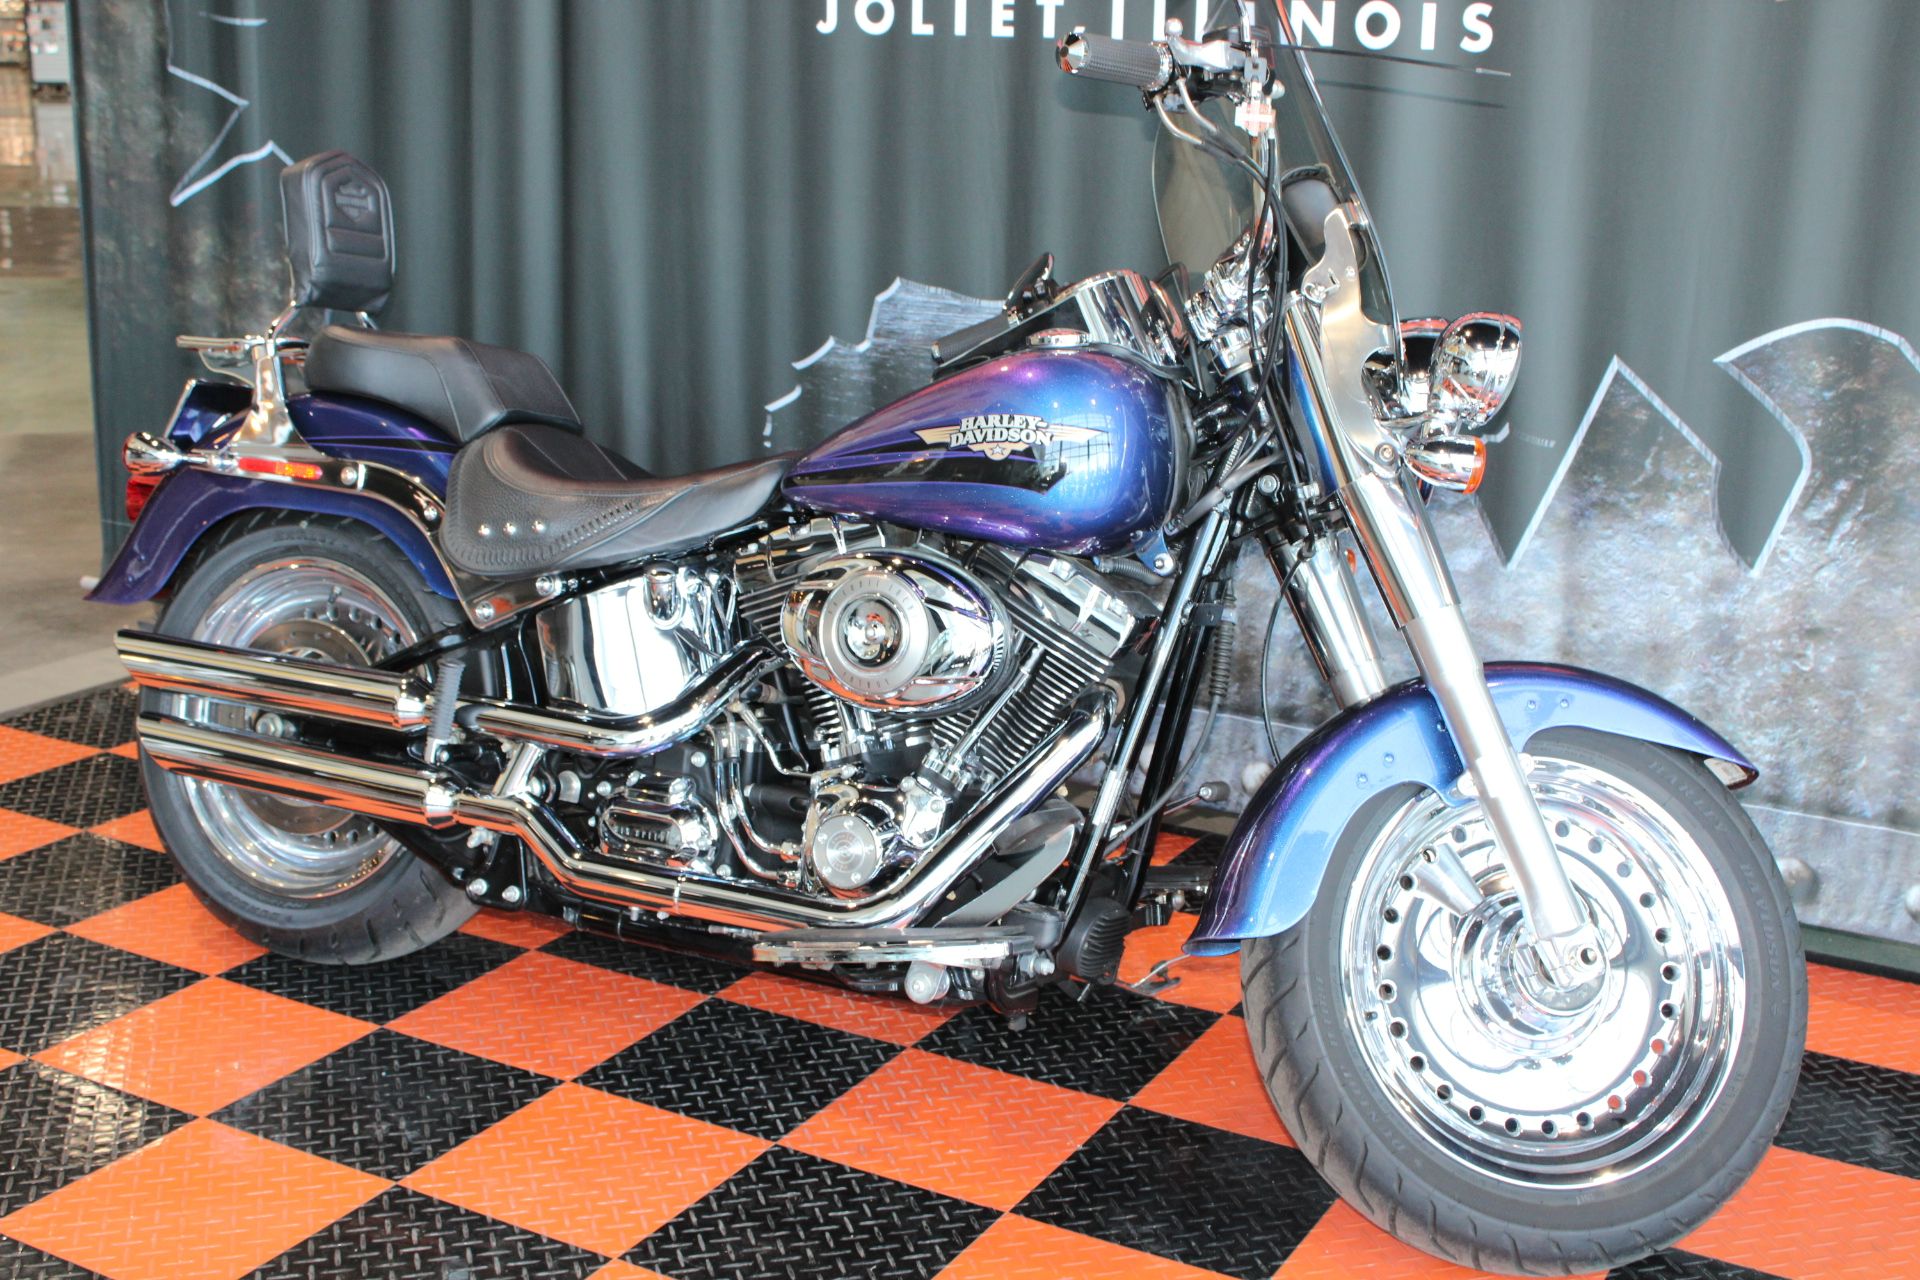 2010 Harley-Davidson Softail® Fat Boy® in Shorewood, Illinois - Photo 3